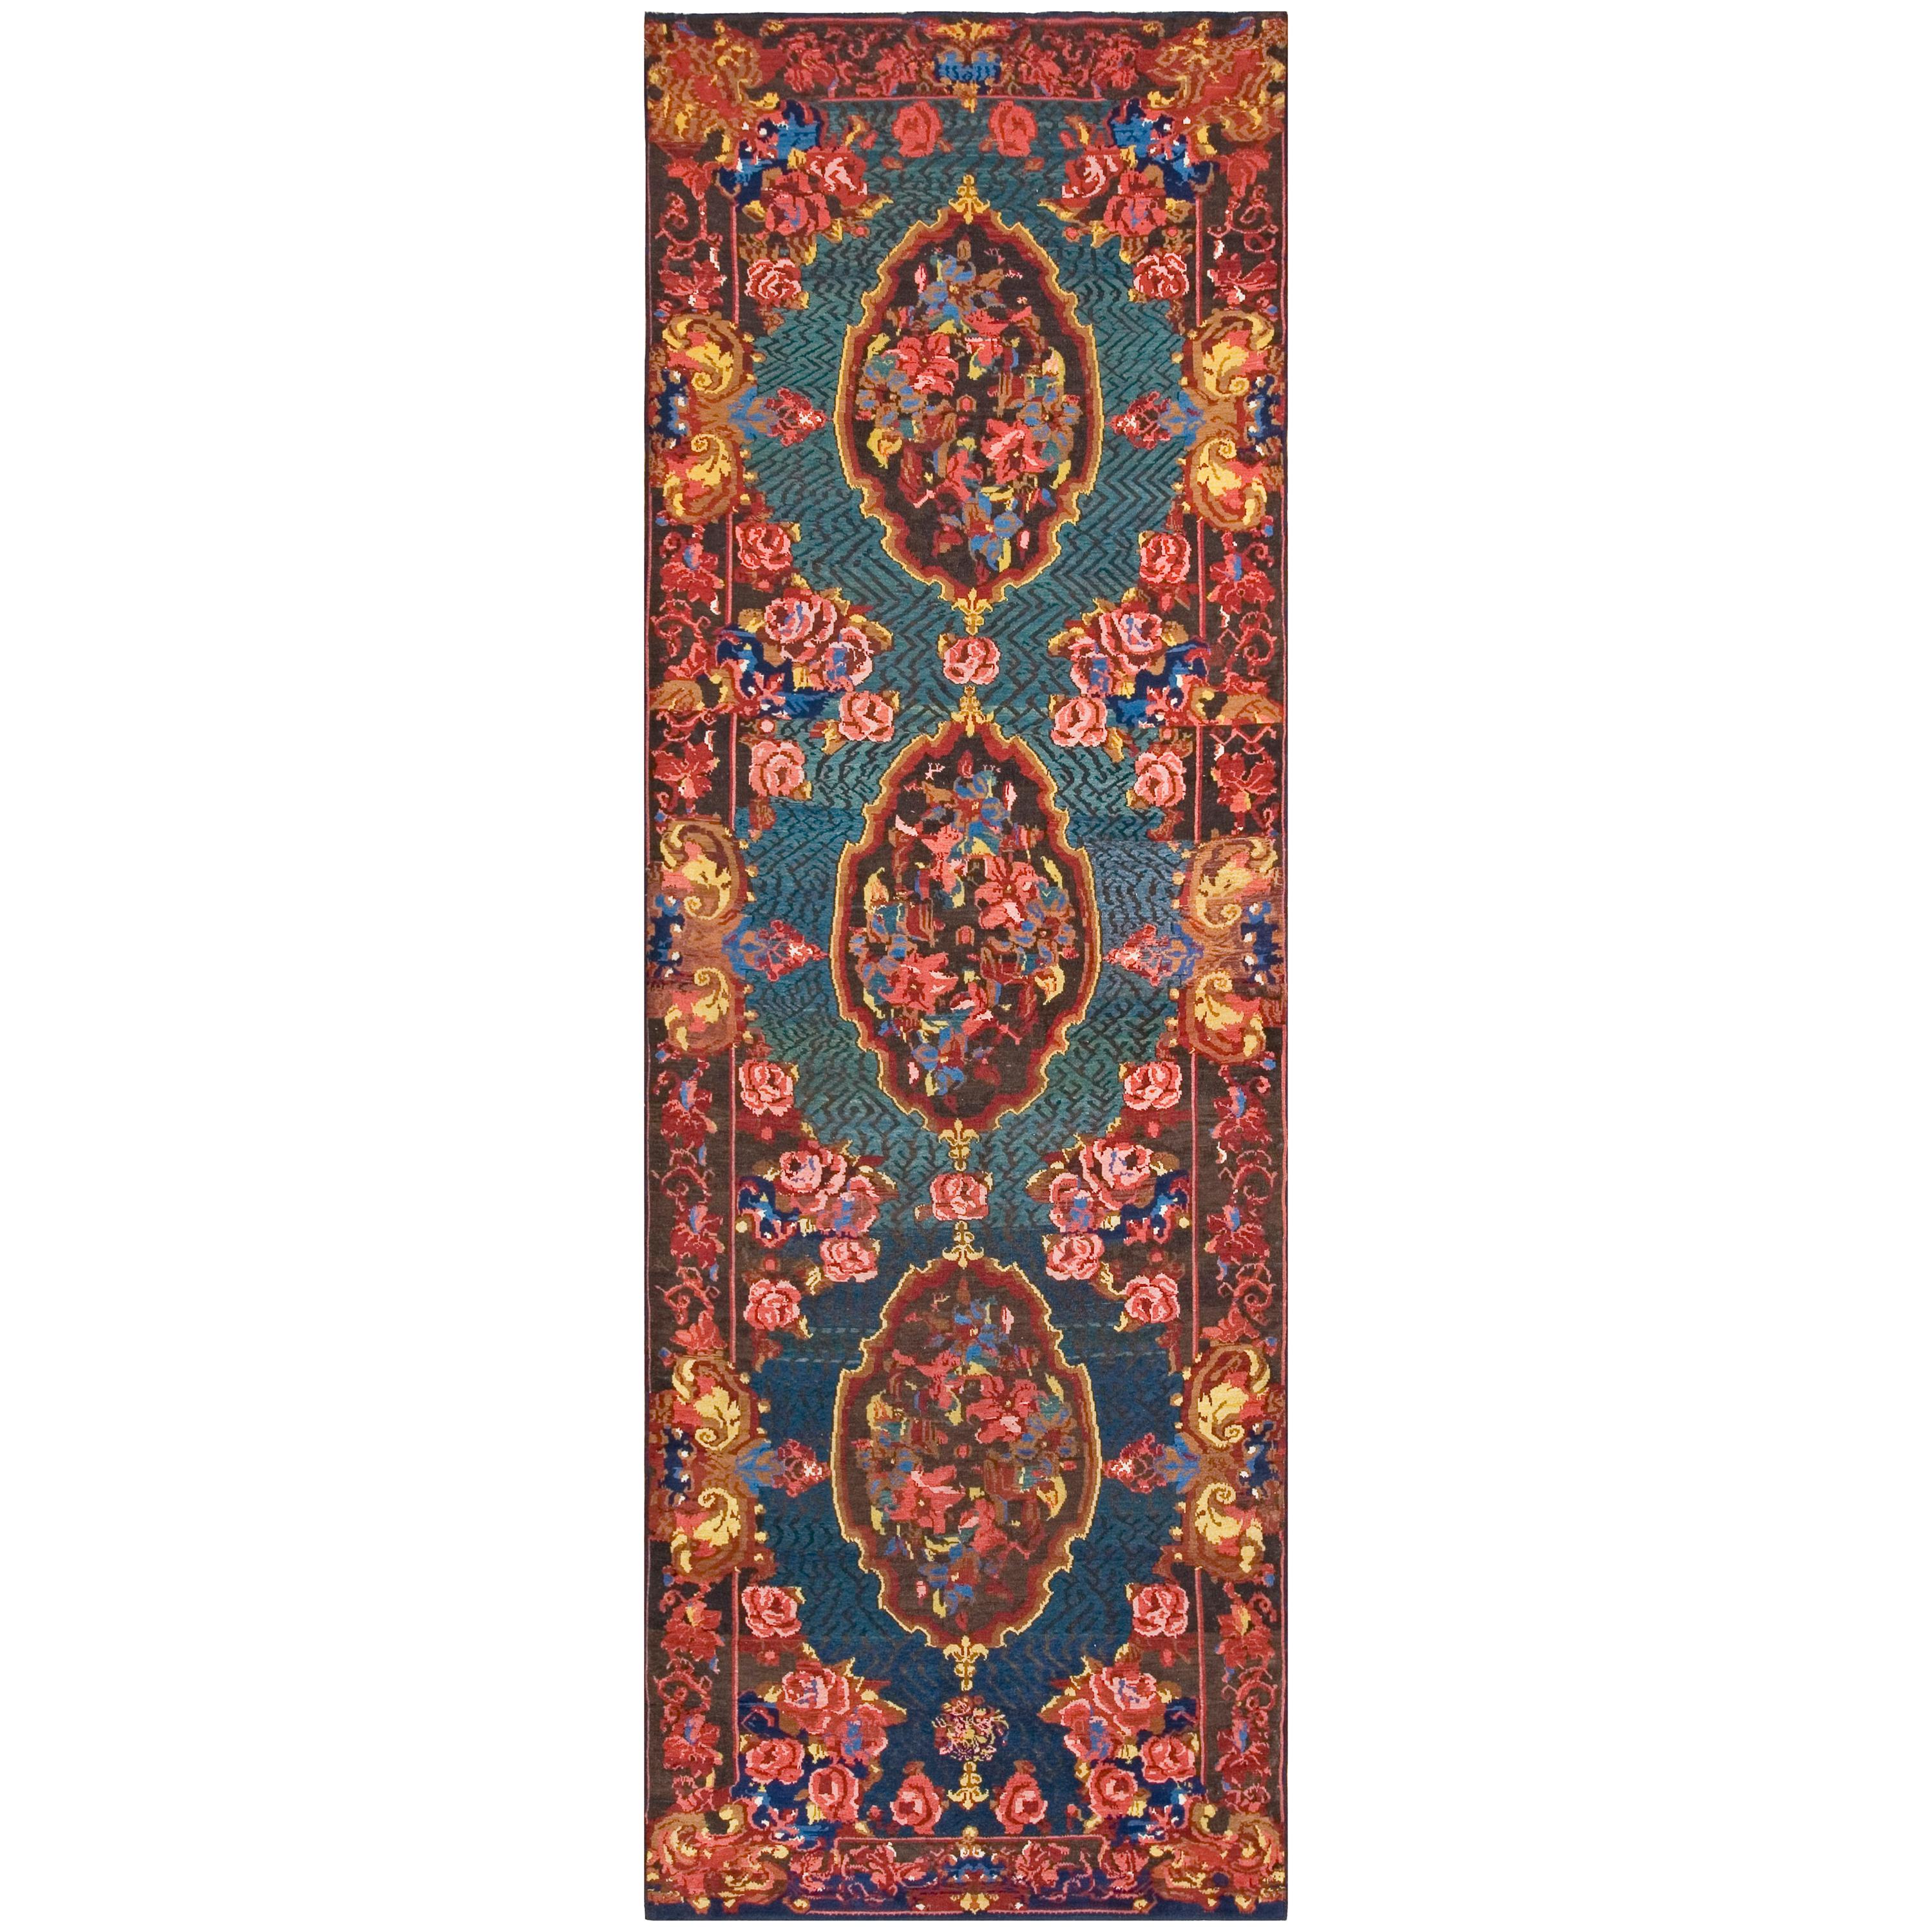 19th Century Caucasian Zeychor Carpet  ( 4'6" x 13'10" - 137 x 422 )